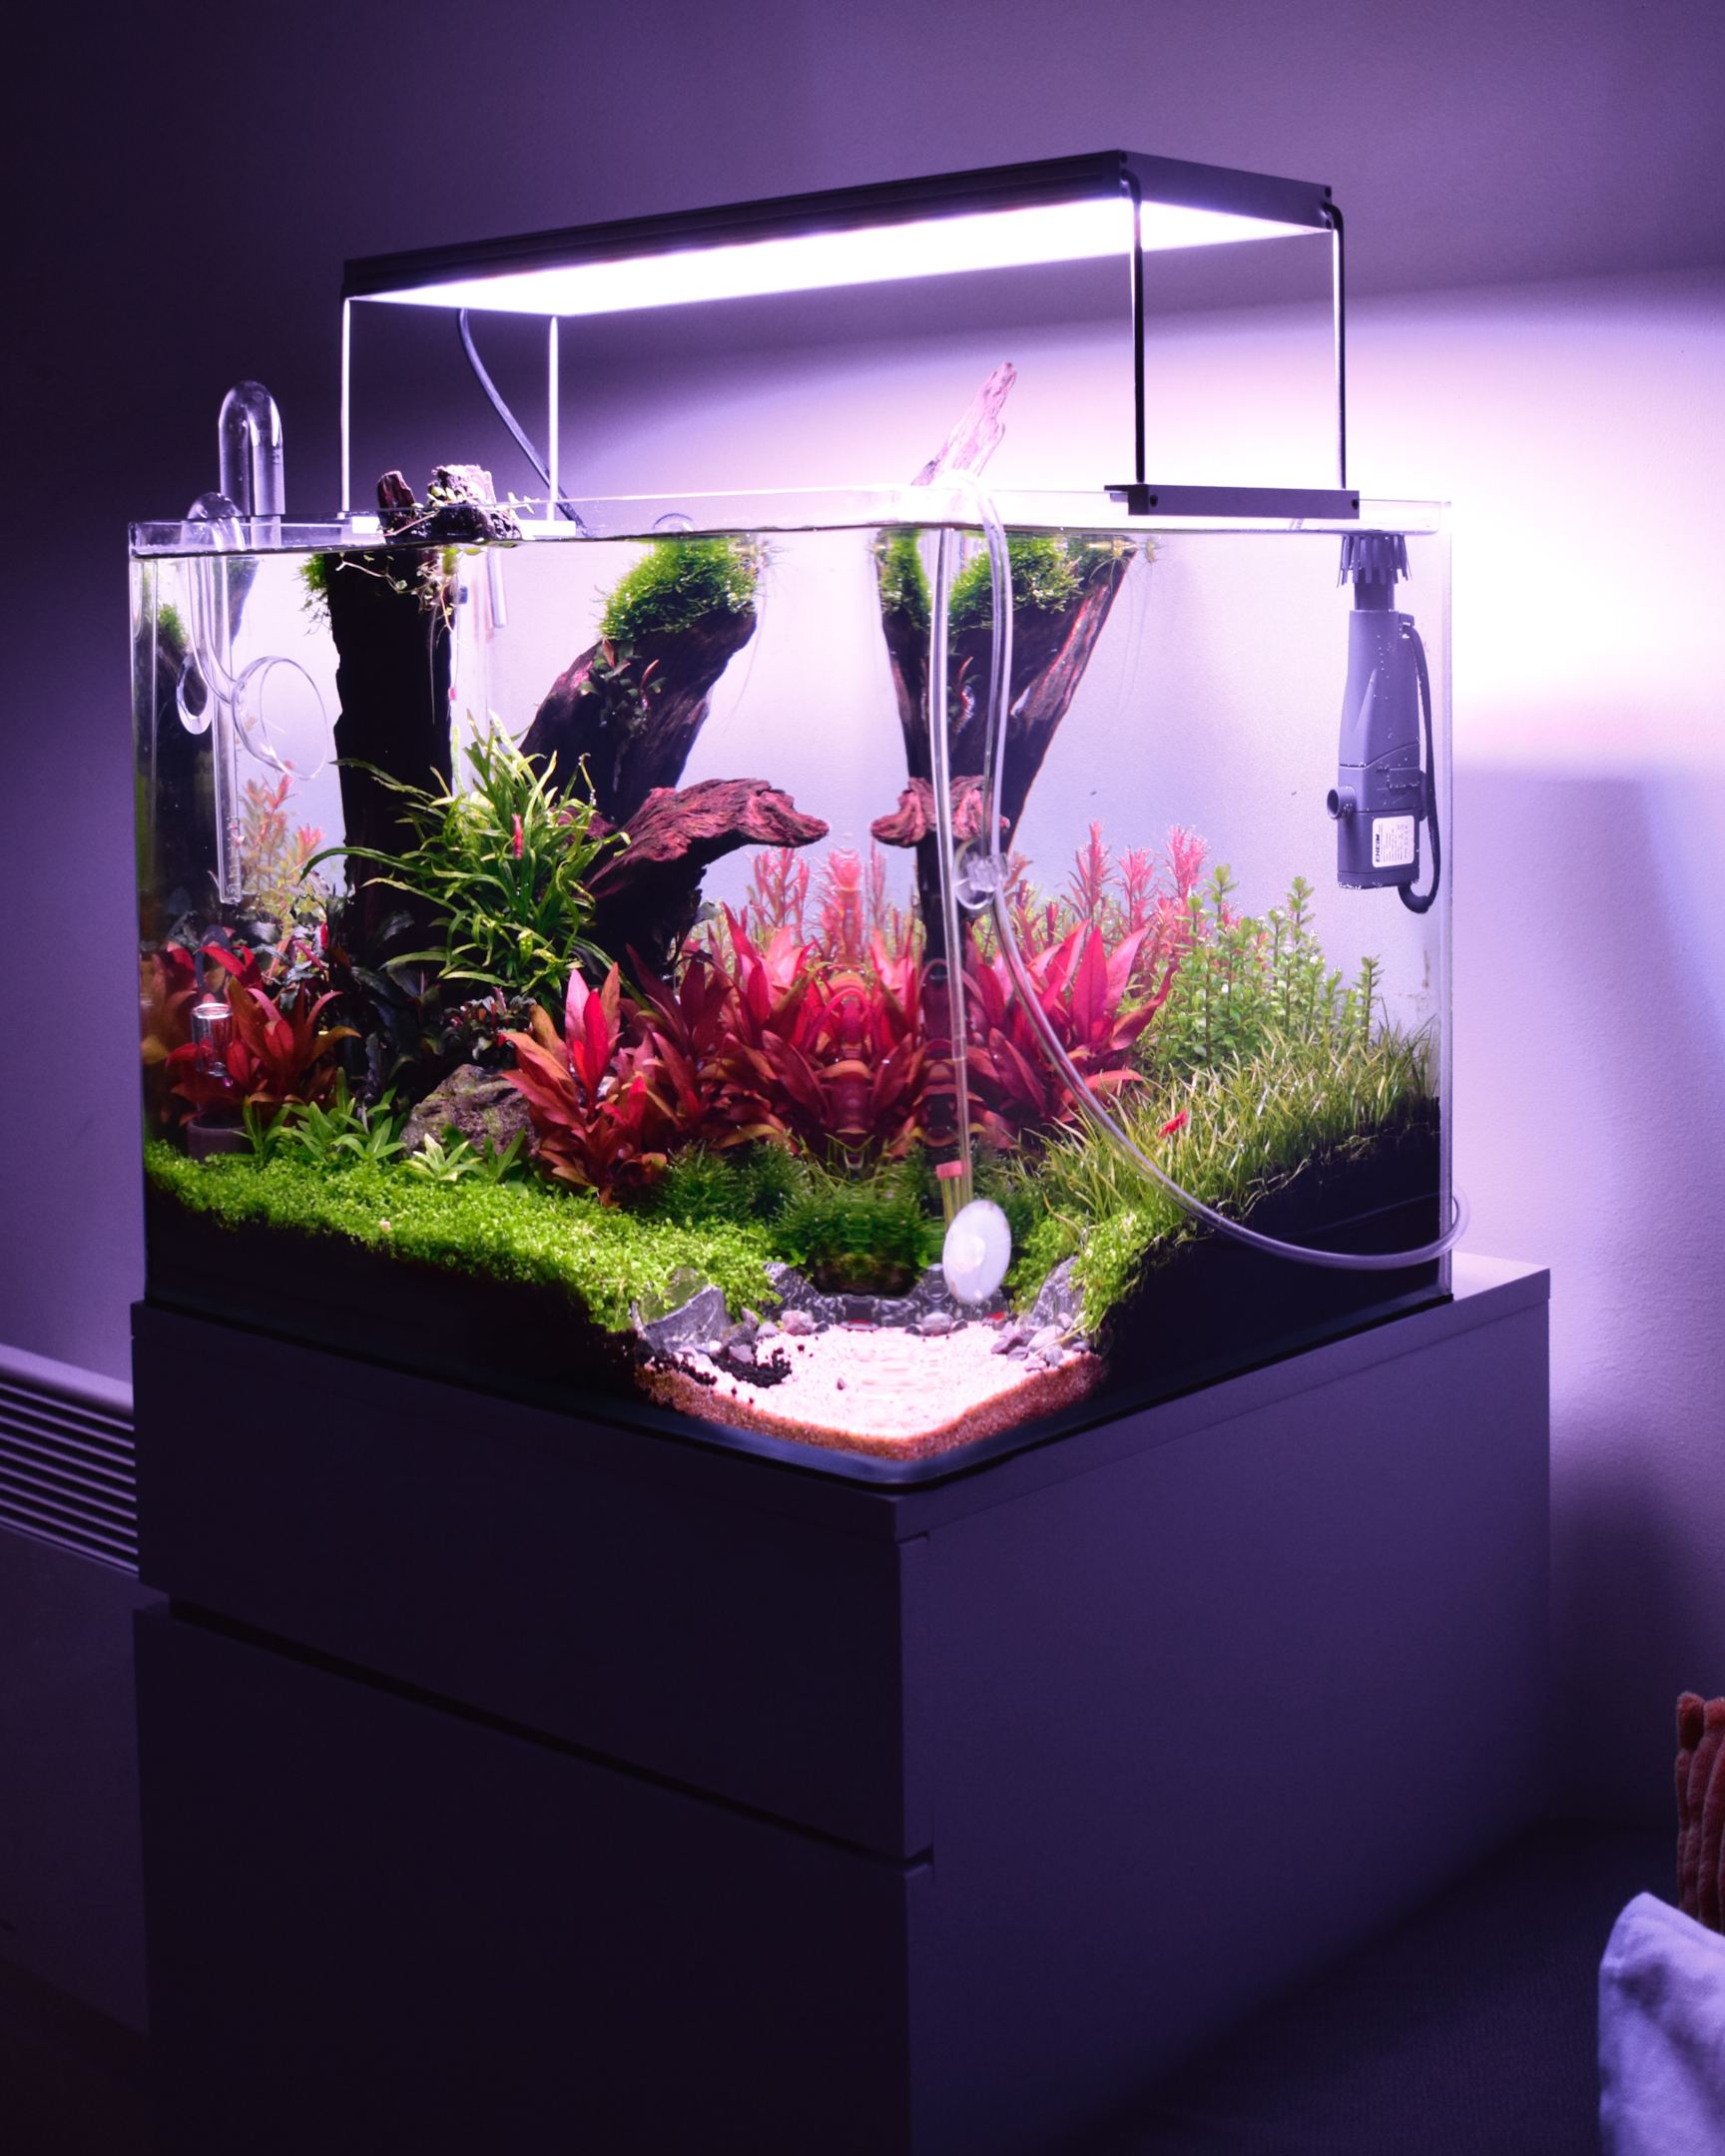 Can Aquarium Plants Tolerate A High pH?